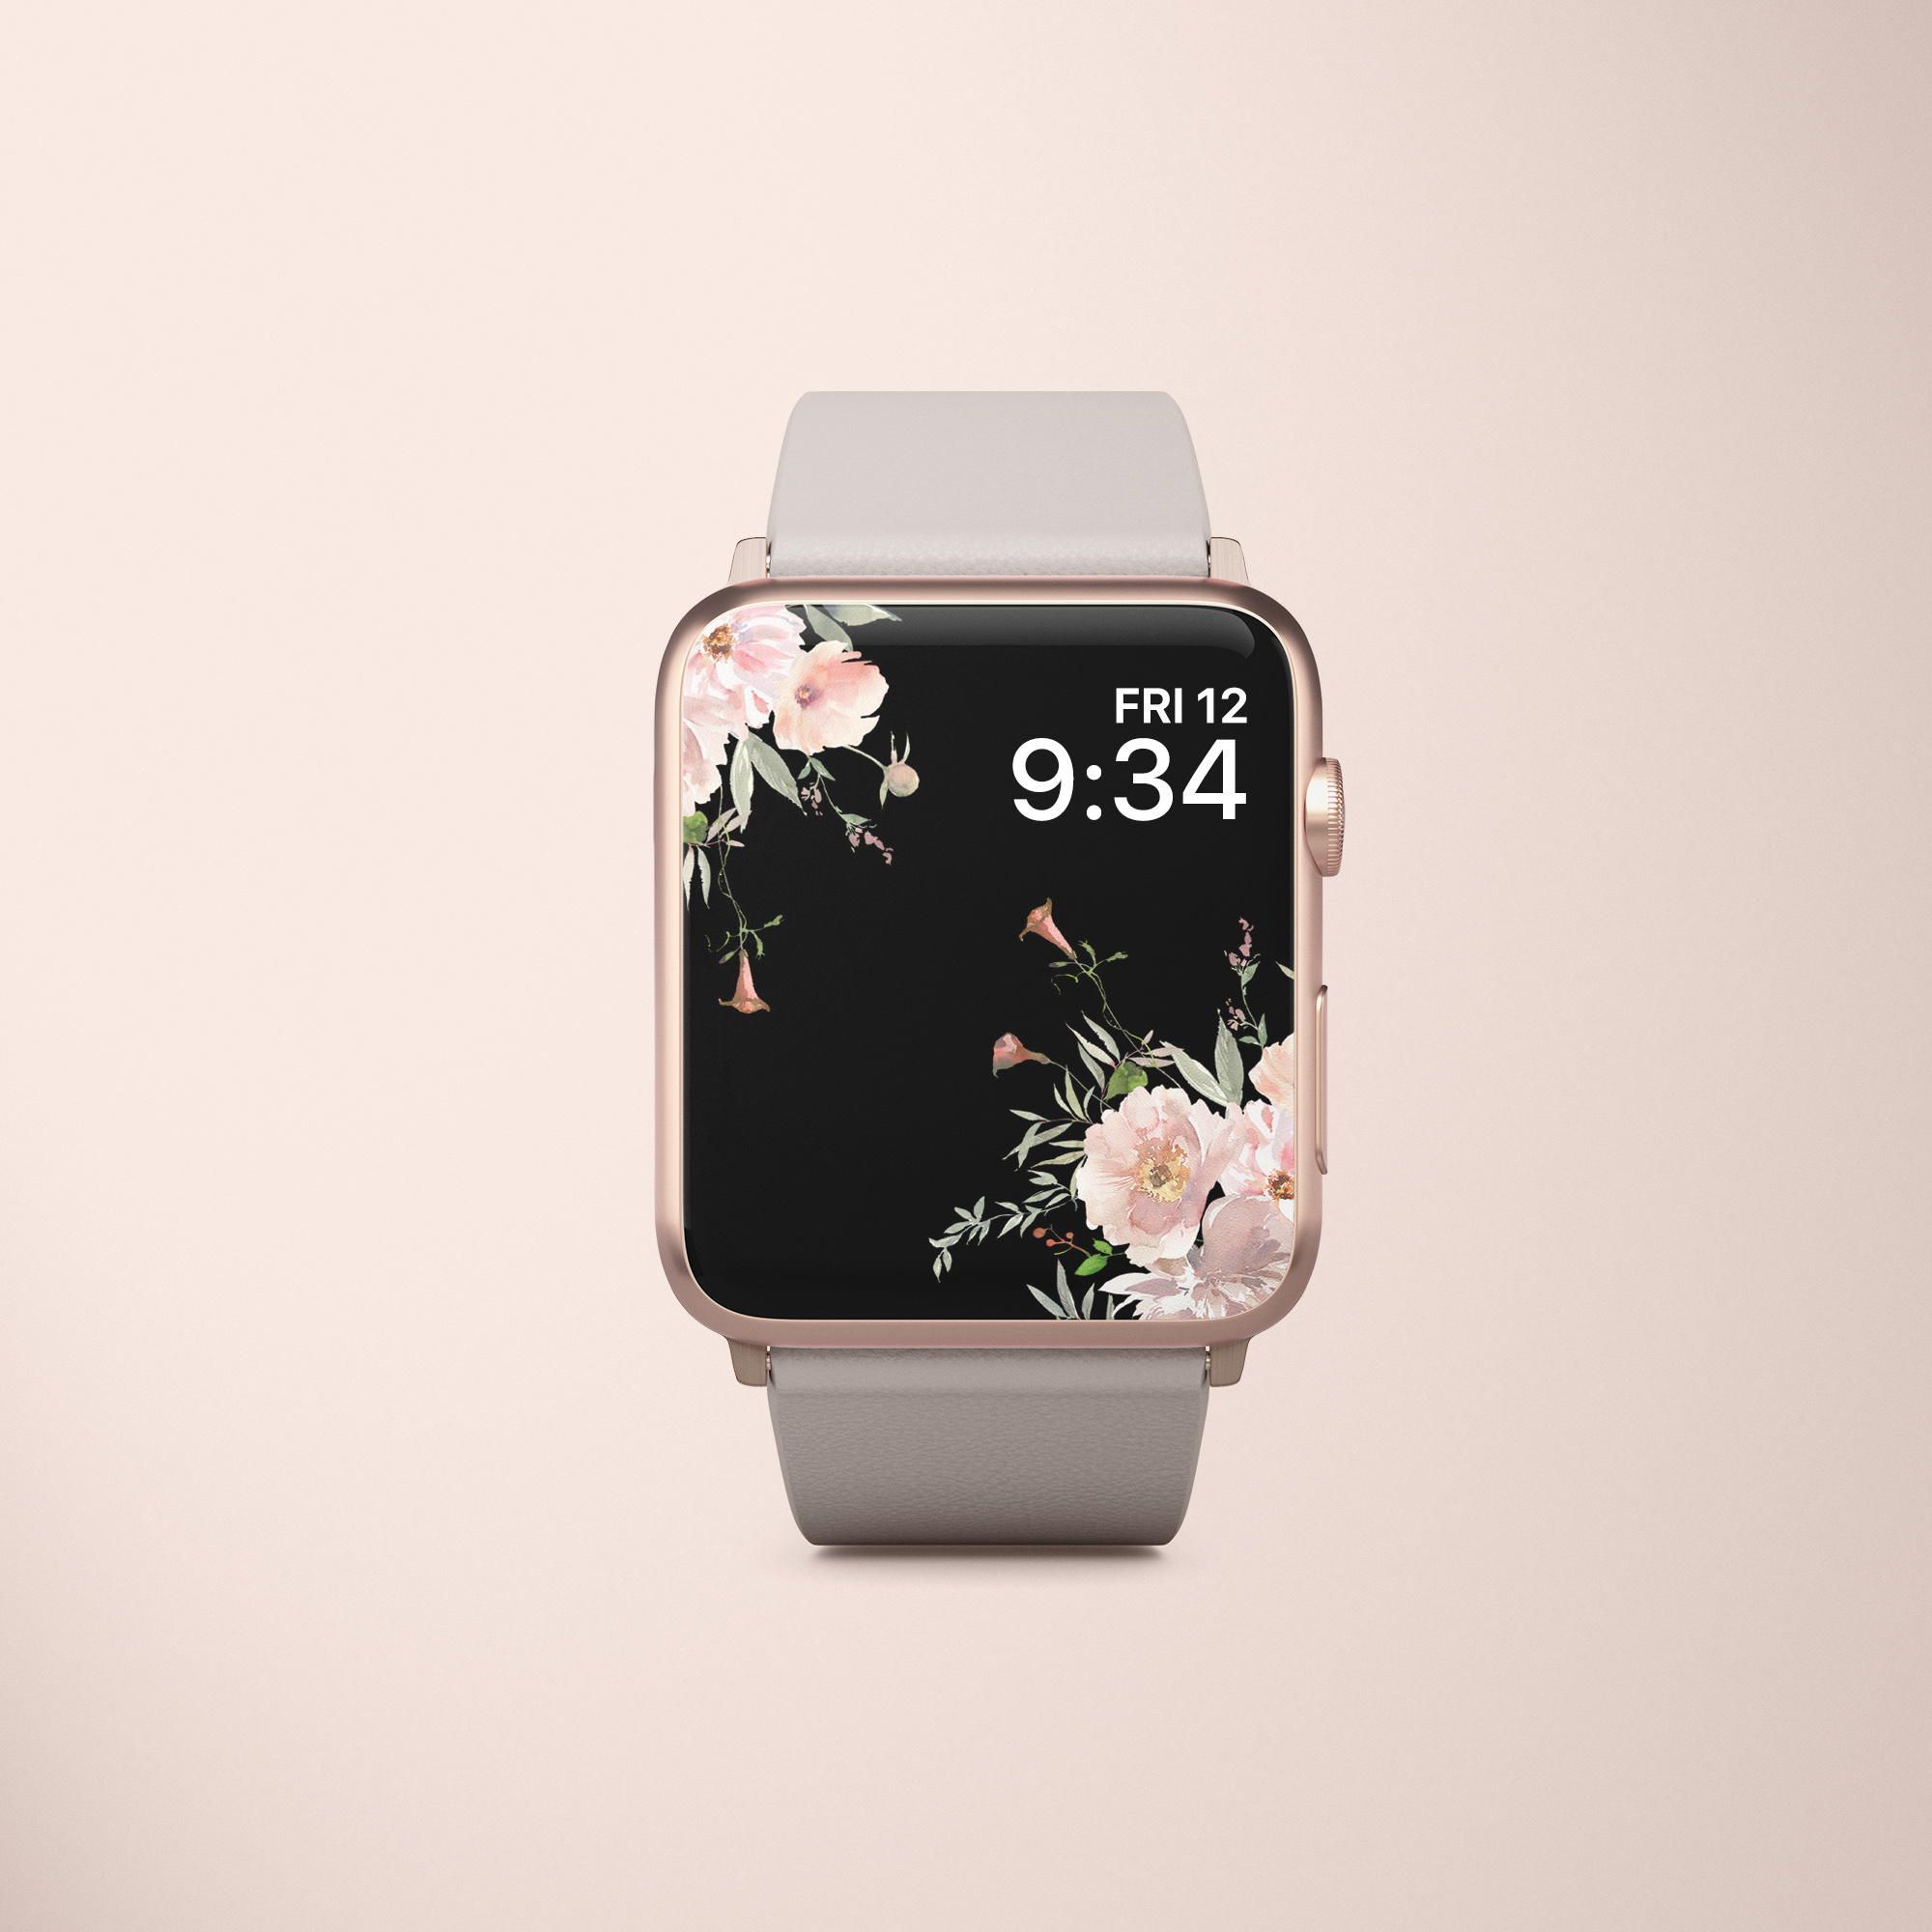  Apple Watch Hintergrundbild 2000x2000. Florale Apple Watch Wallpaper Flower Apple Watch Face.de. Apple watch wallpaper, Apple watch, Watch wallpaper